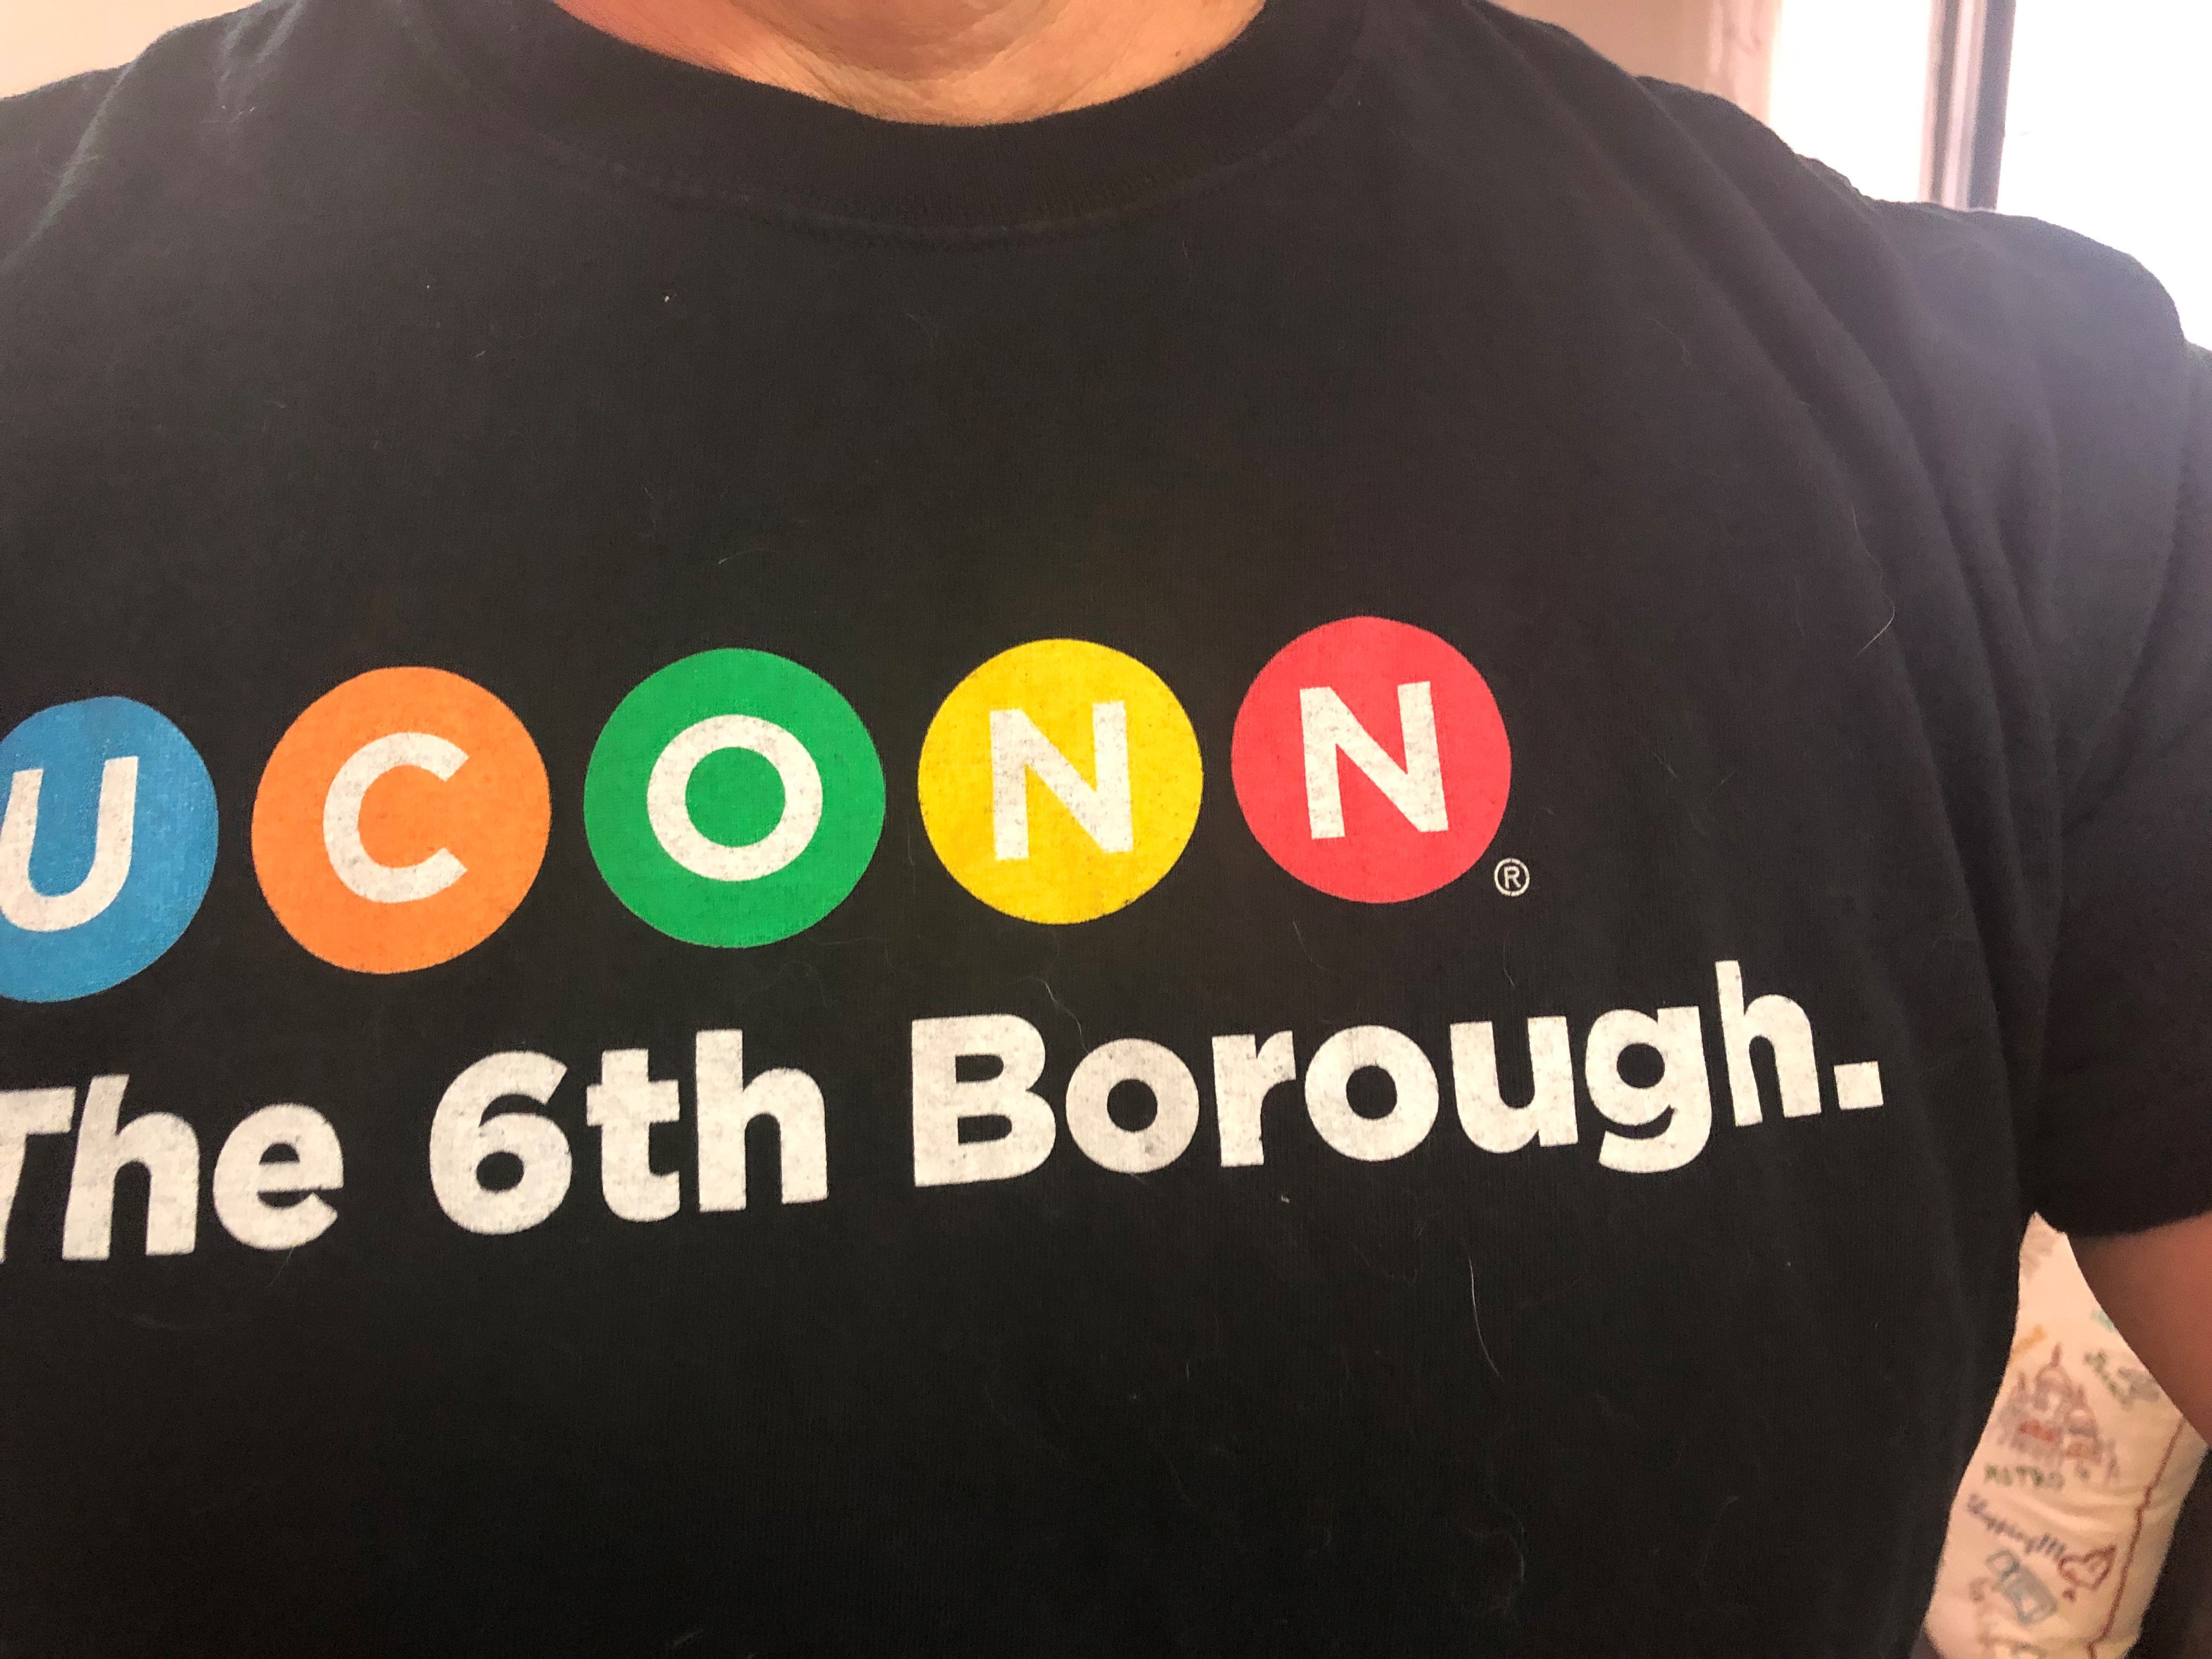 UConn 6th borough t shirt.jpg